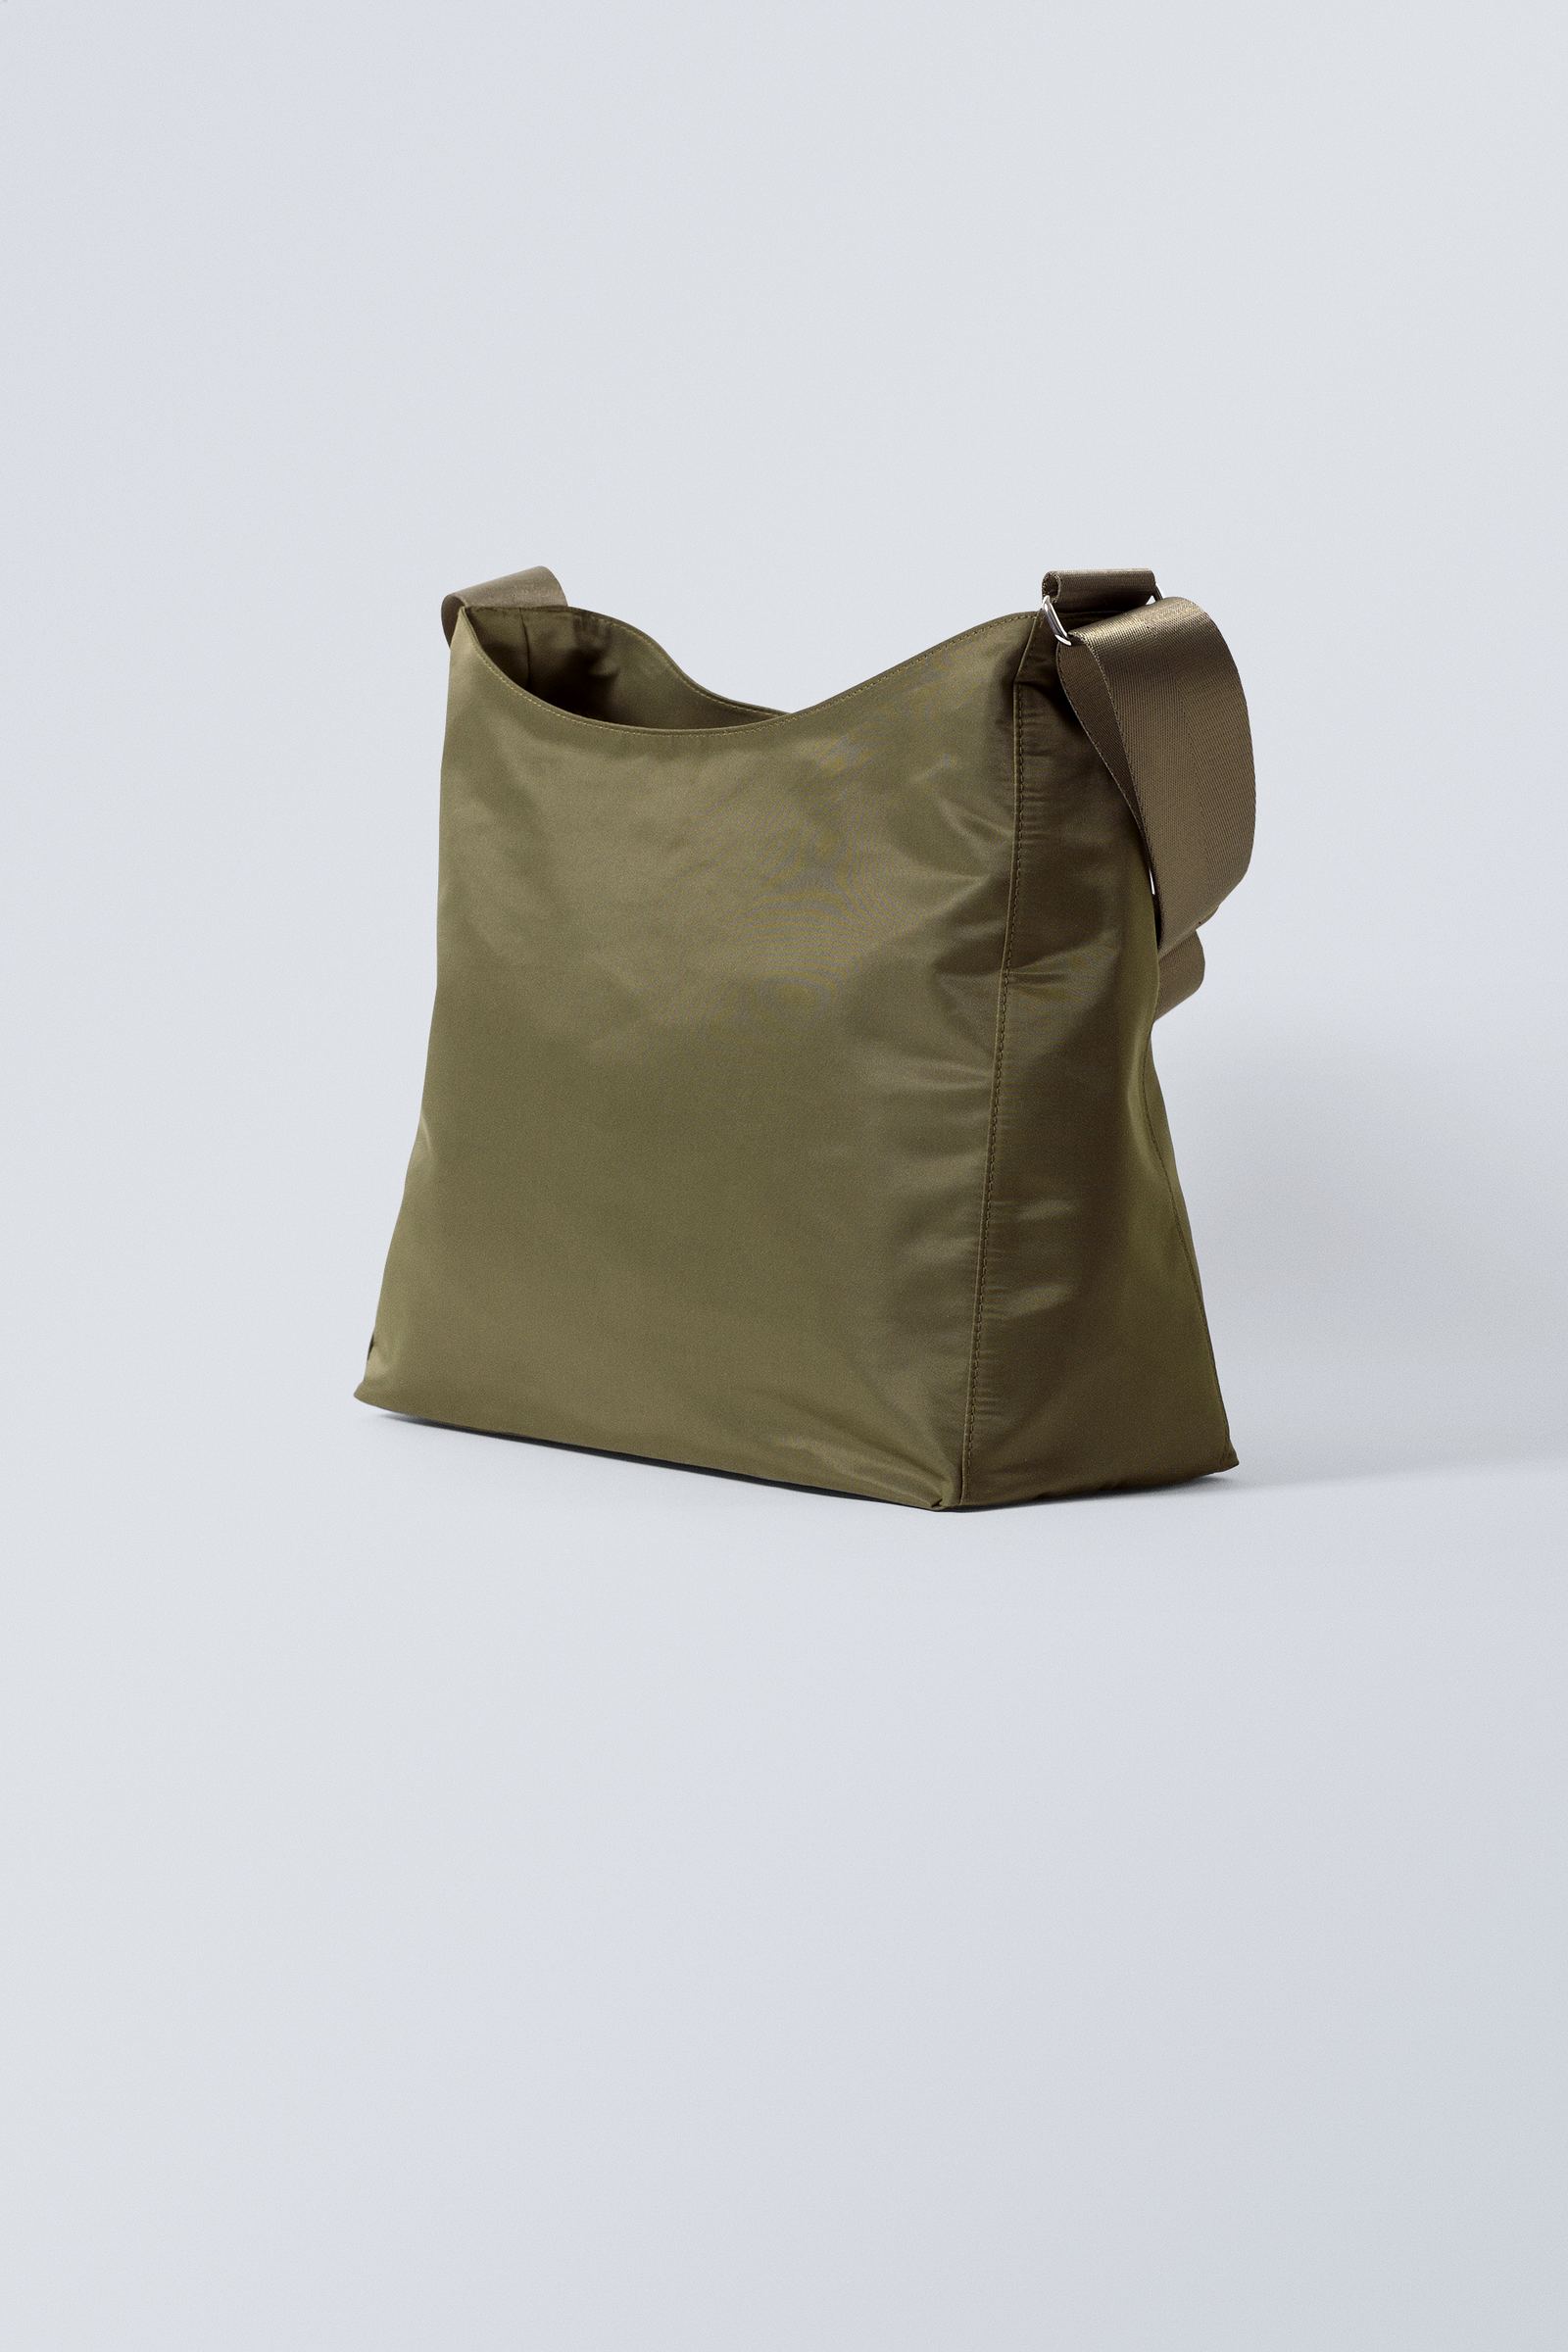 Khaki green - Carry Bag - 1